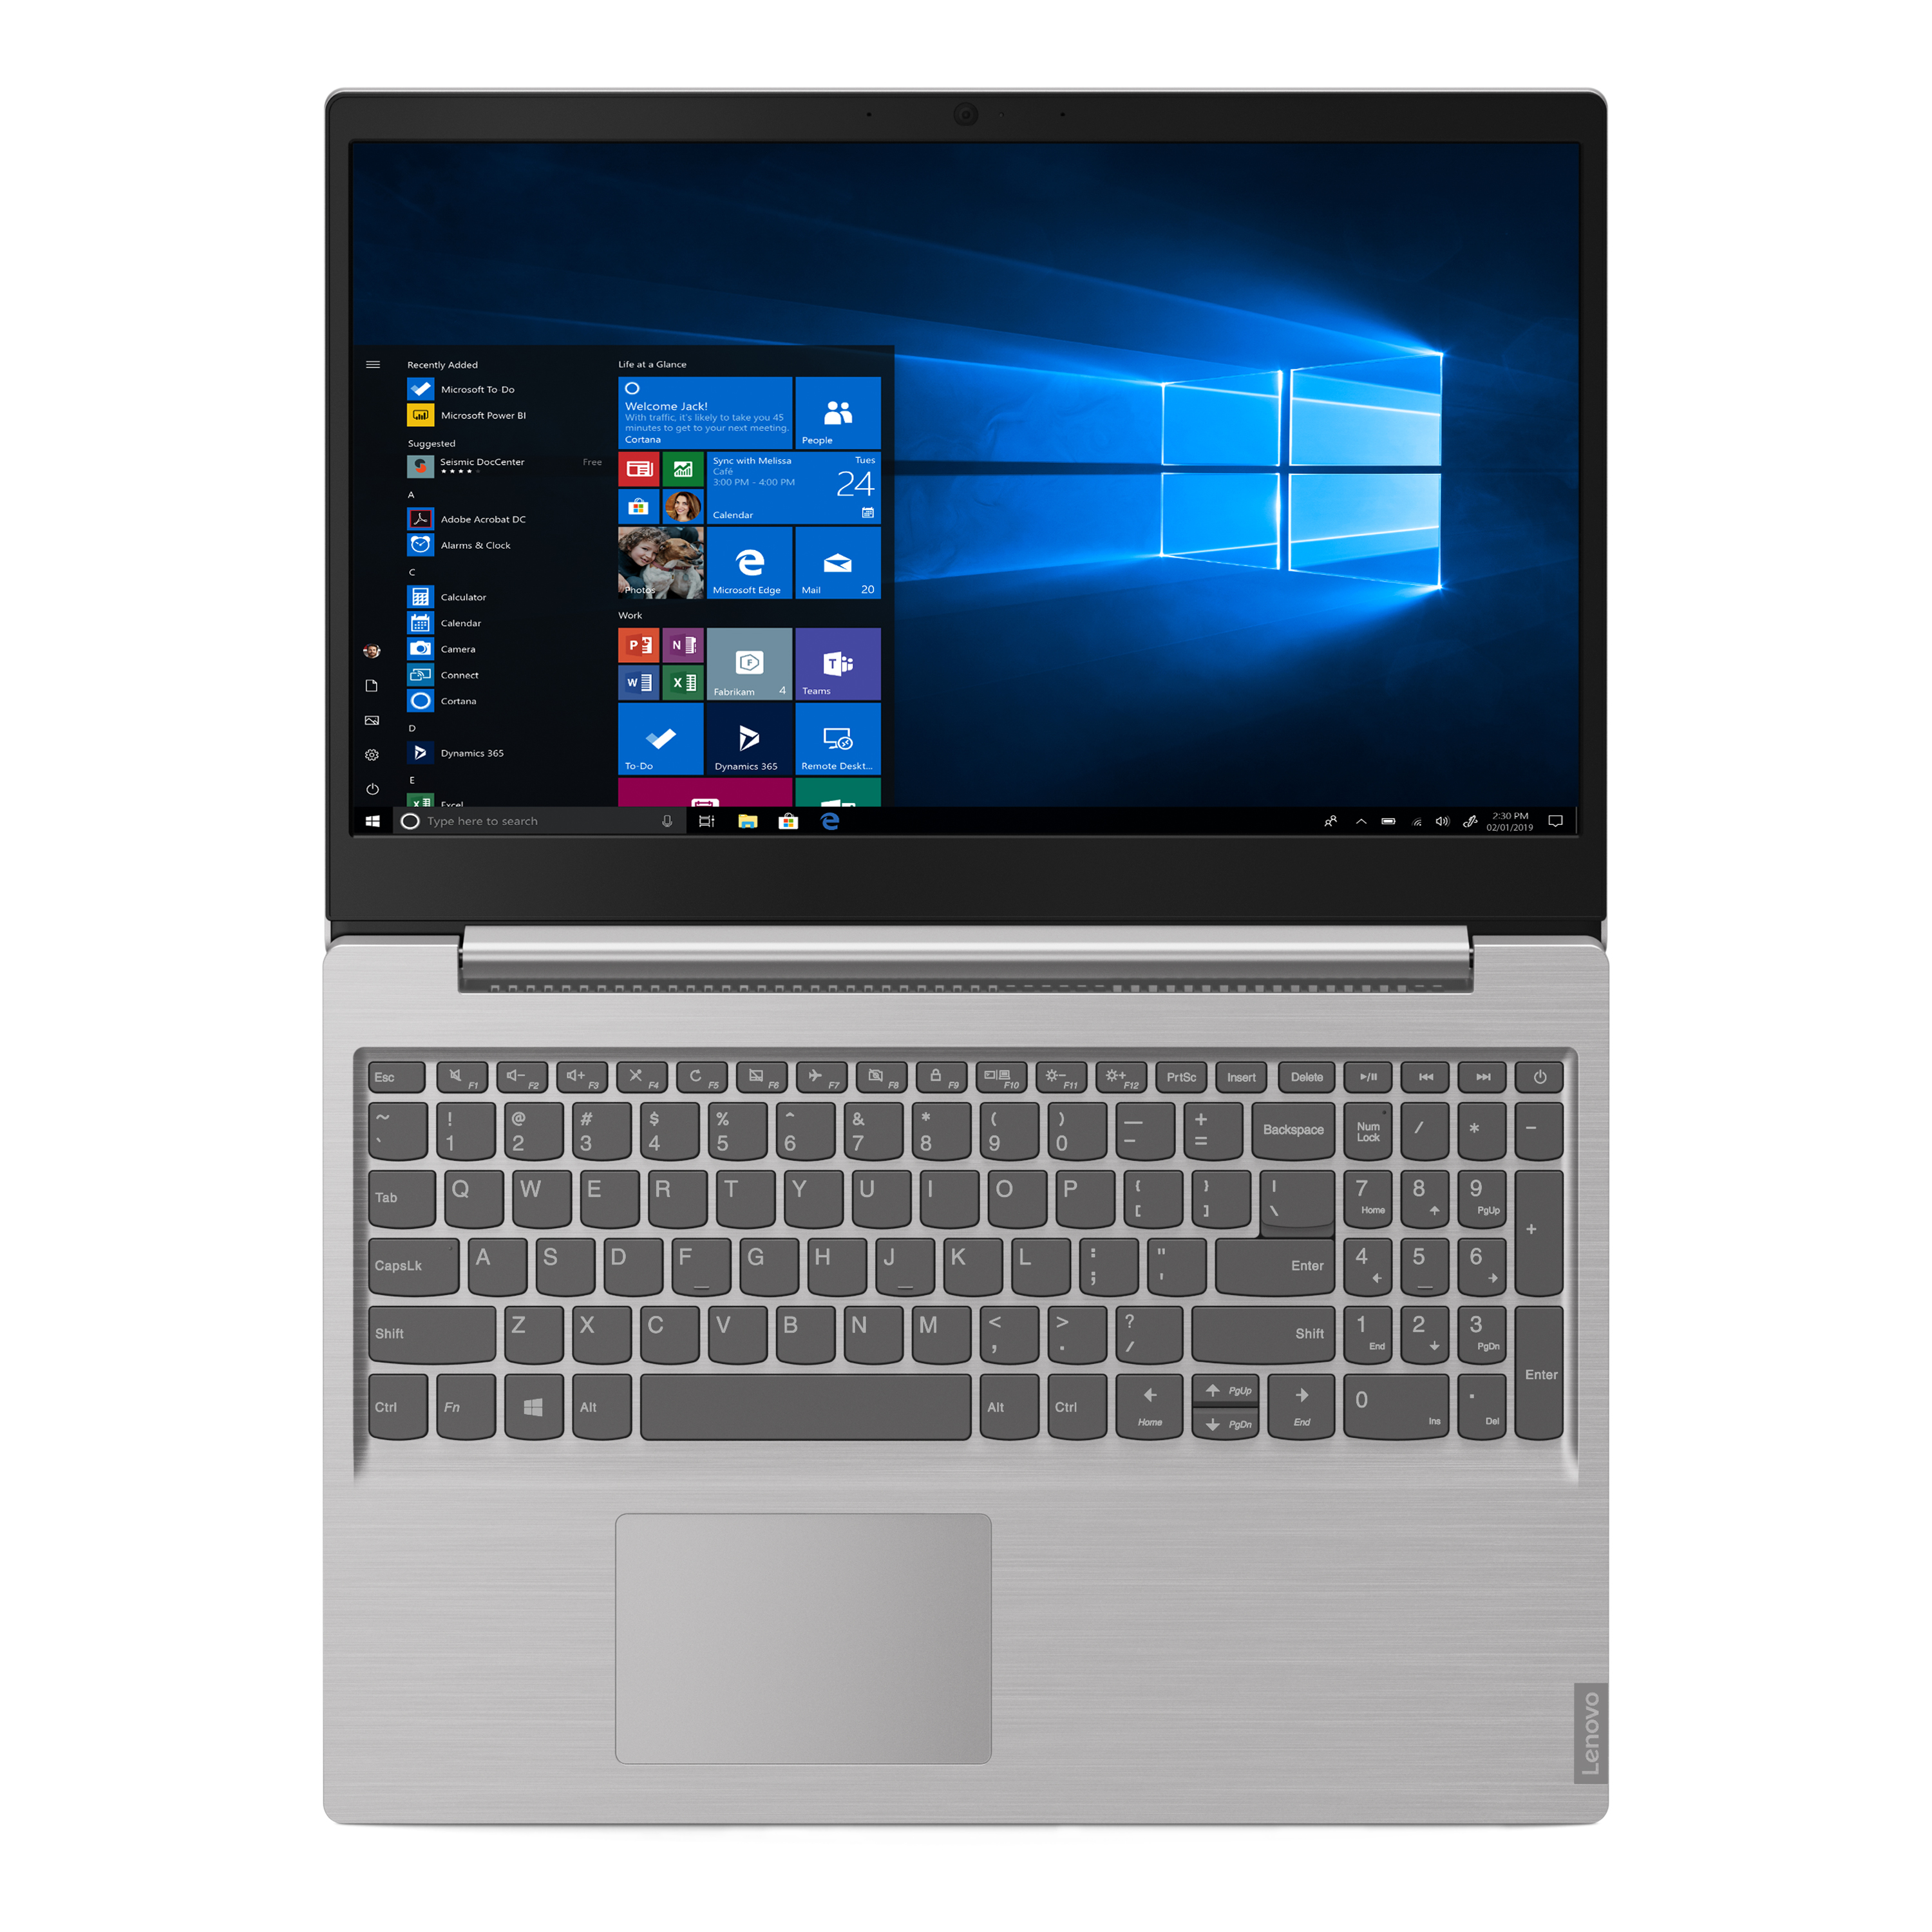 Lenovo ideapad S145 15.6" Laptop, Intel Celeron 4205U Dual-Core Processor, 4GB Memory, 128GB Solid State Drive, Windows 10 - Grey - 81MV00FGUS - image 2 of 17